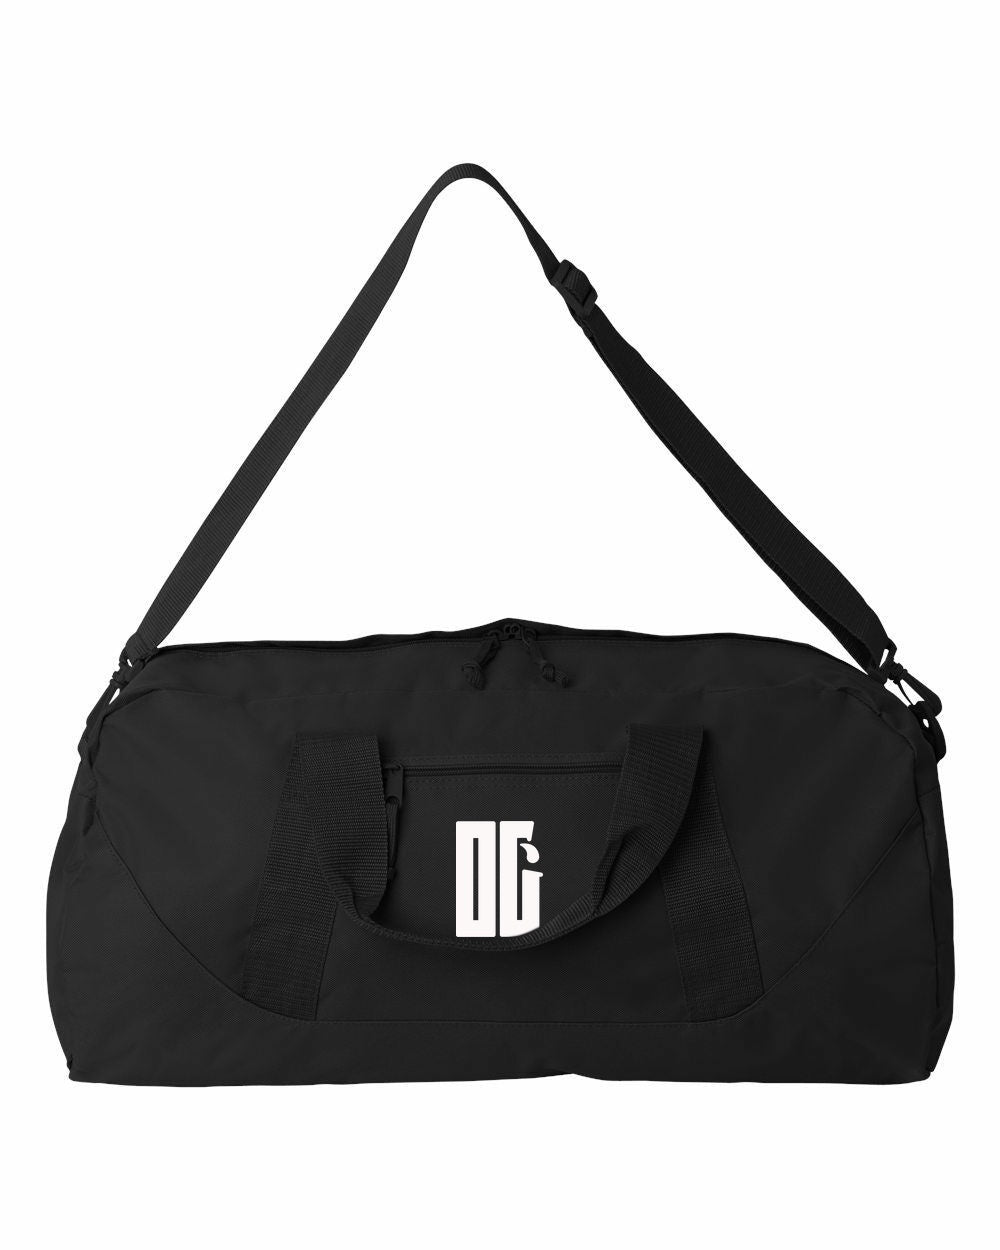 OG Black Duffle Bag